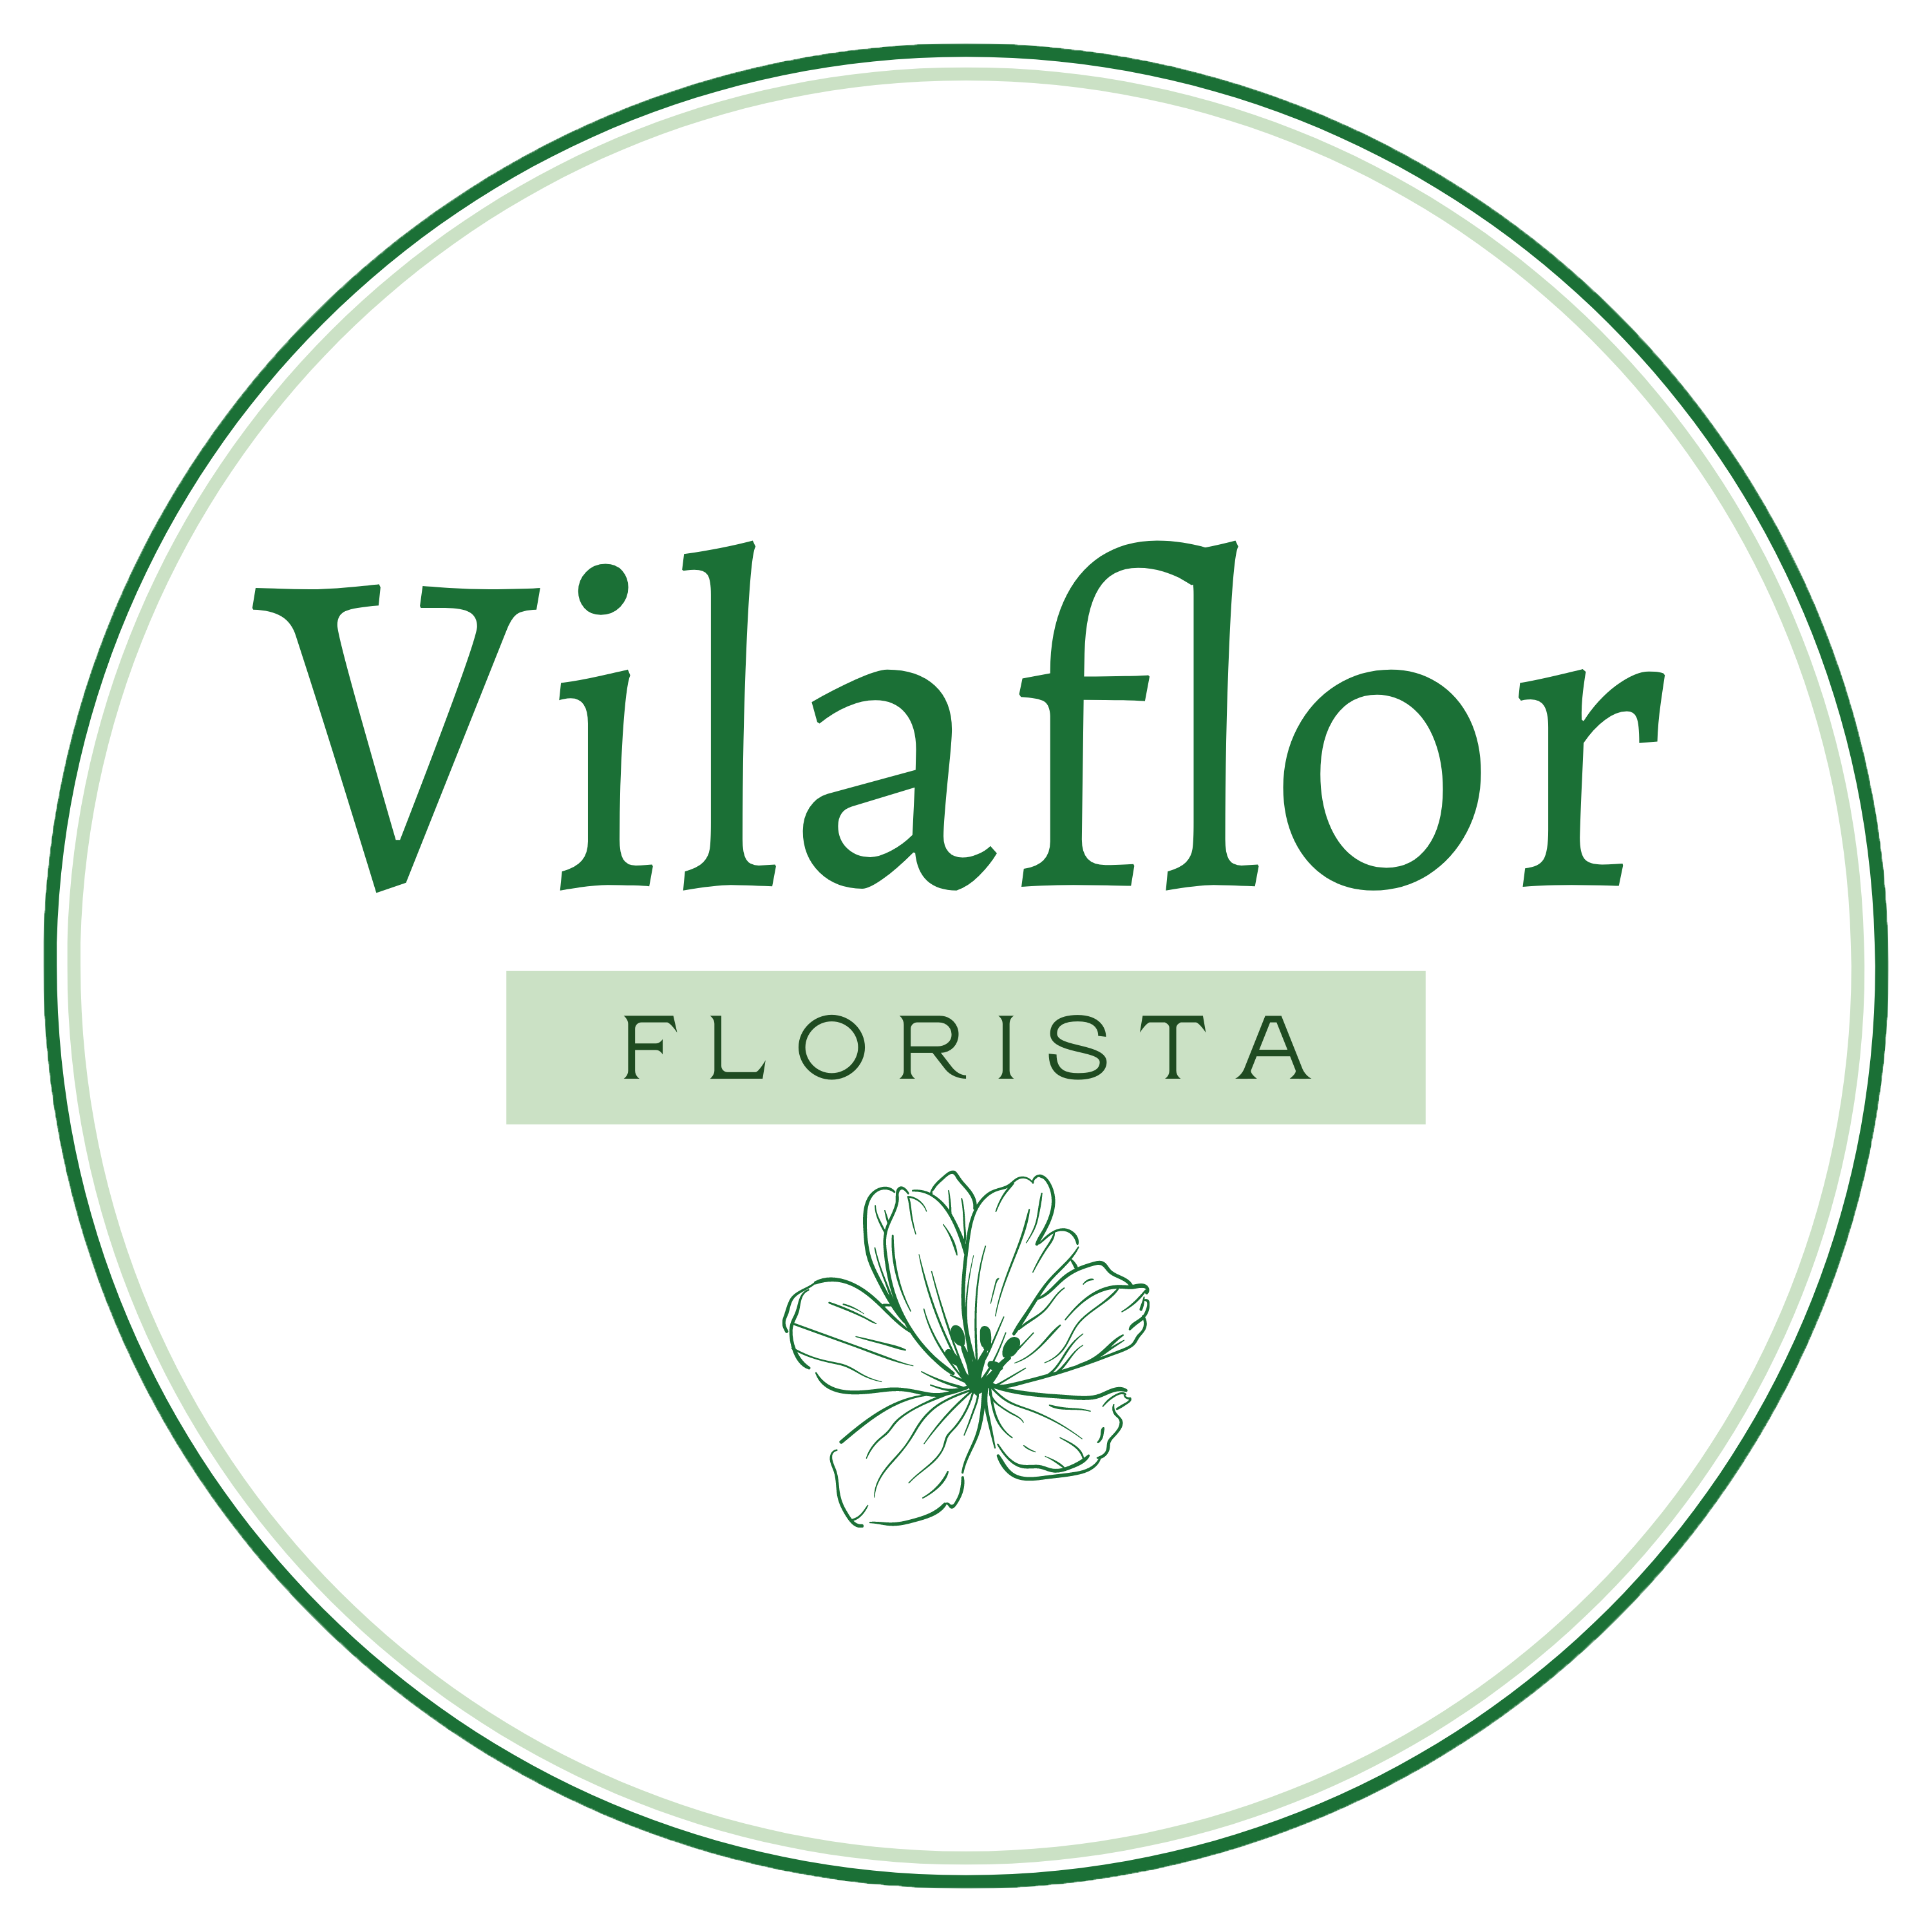 Vilaflor - Florista